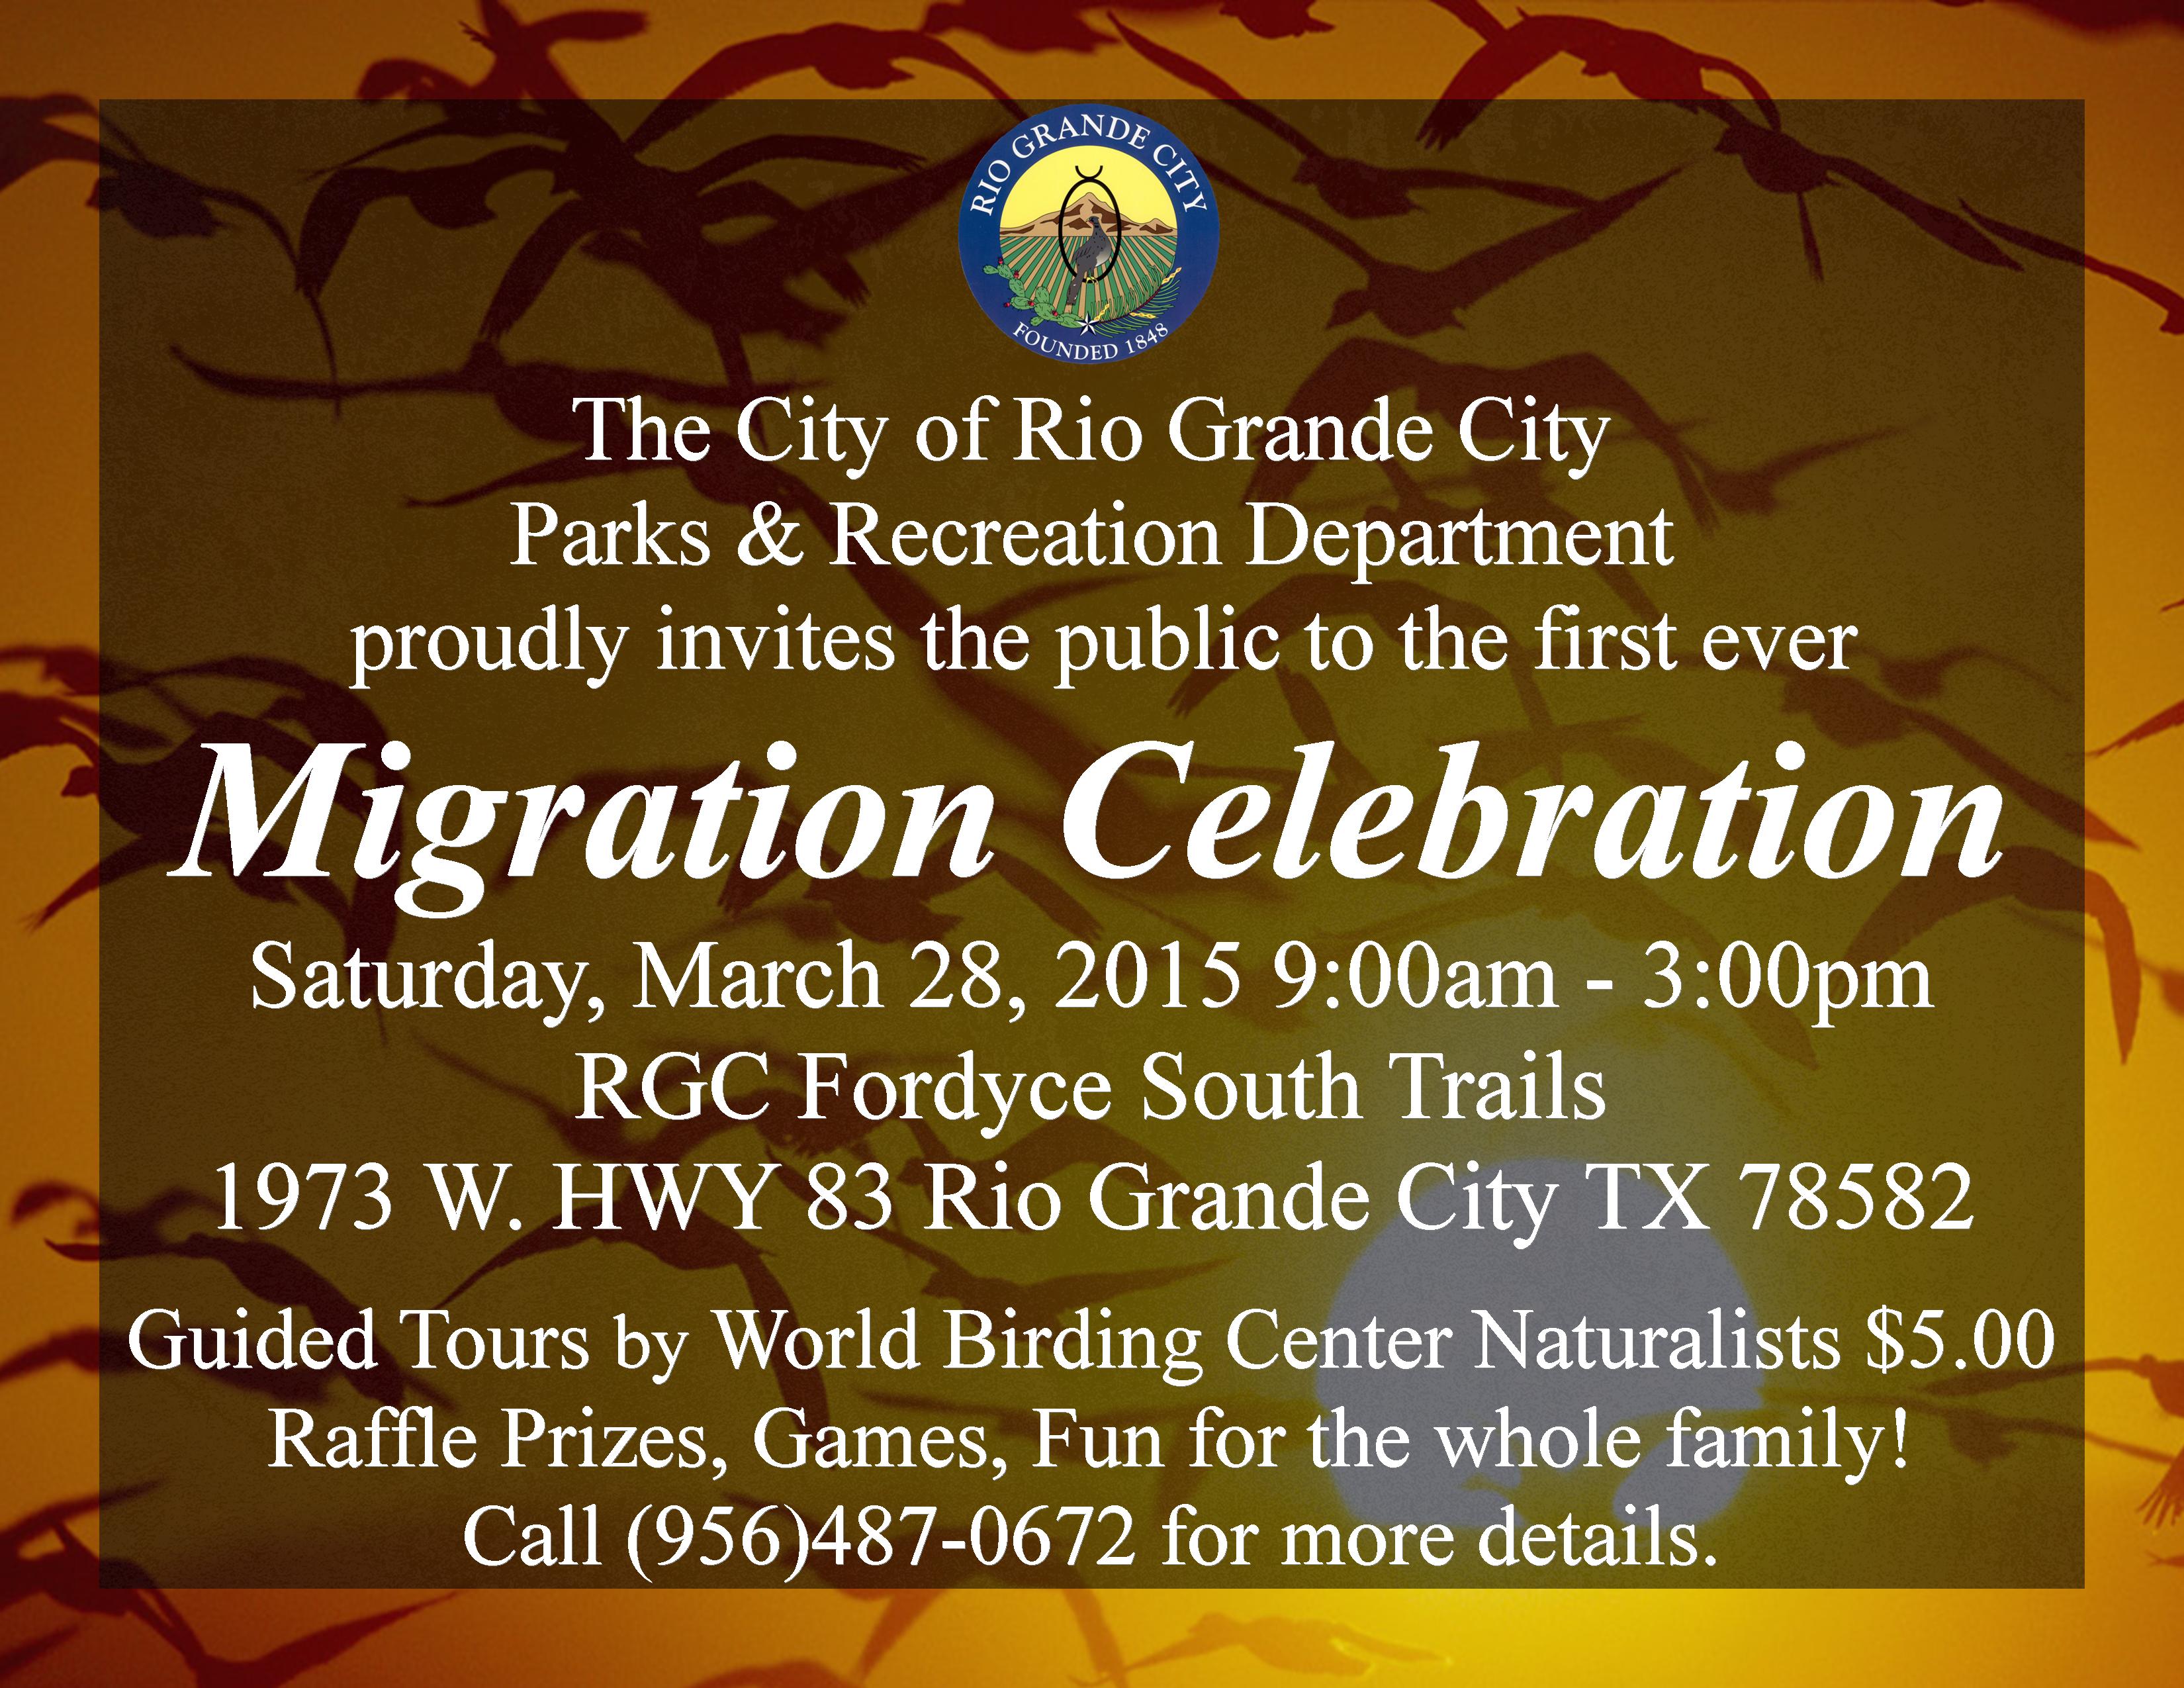 Migration Celebration